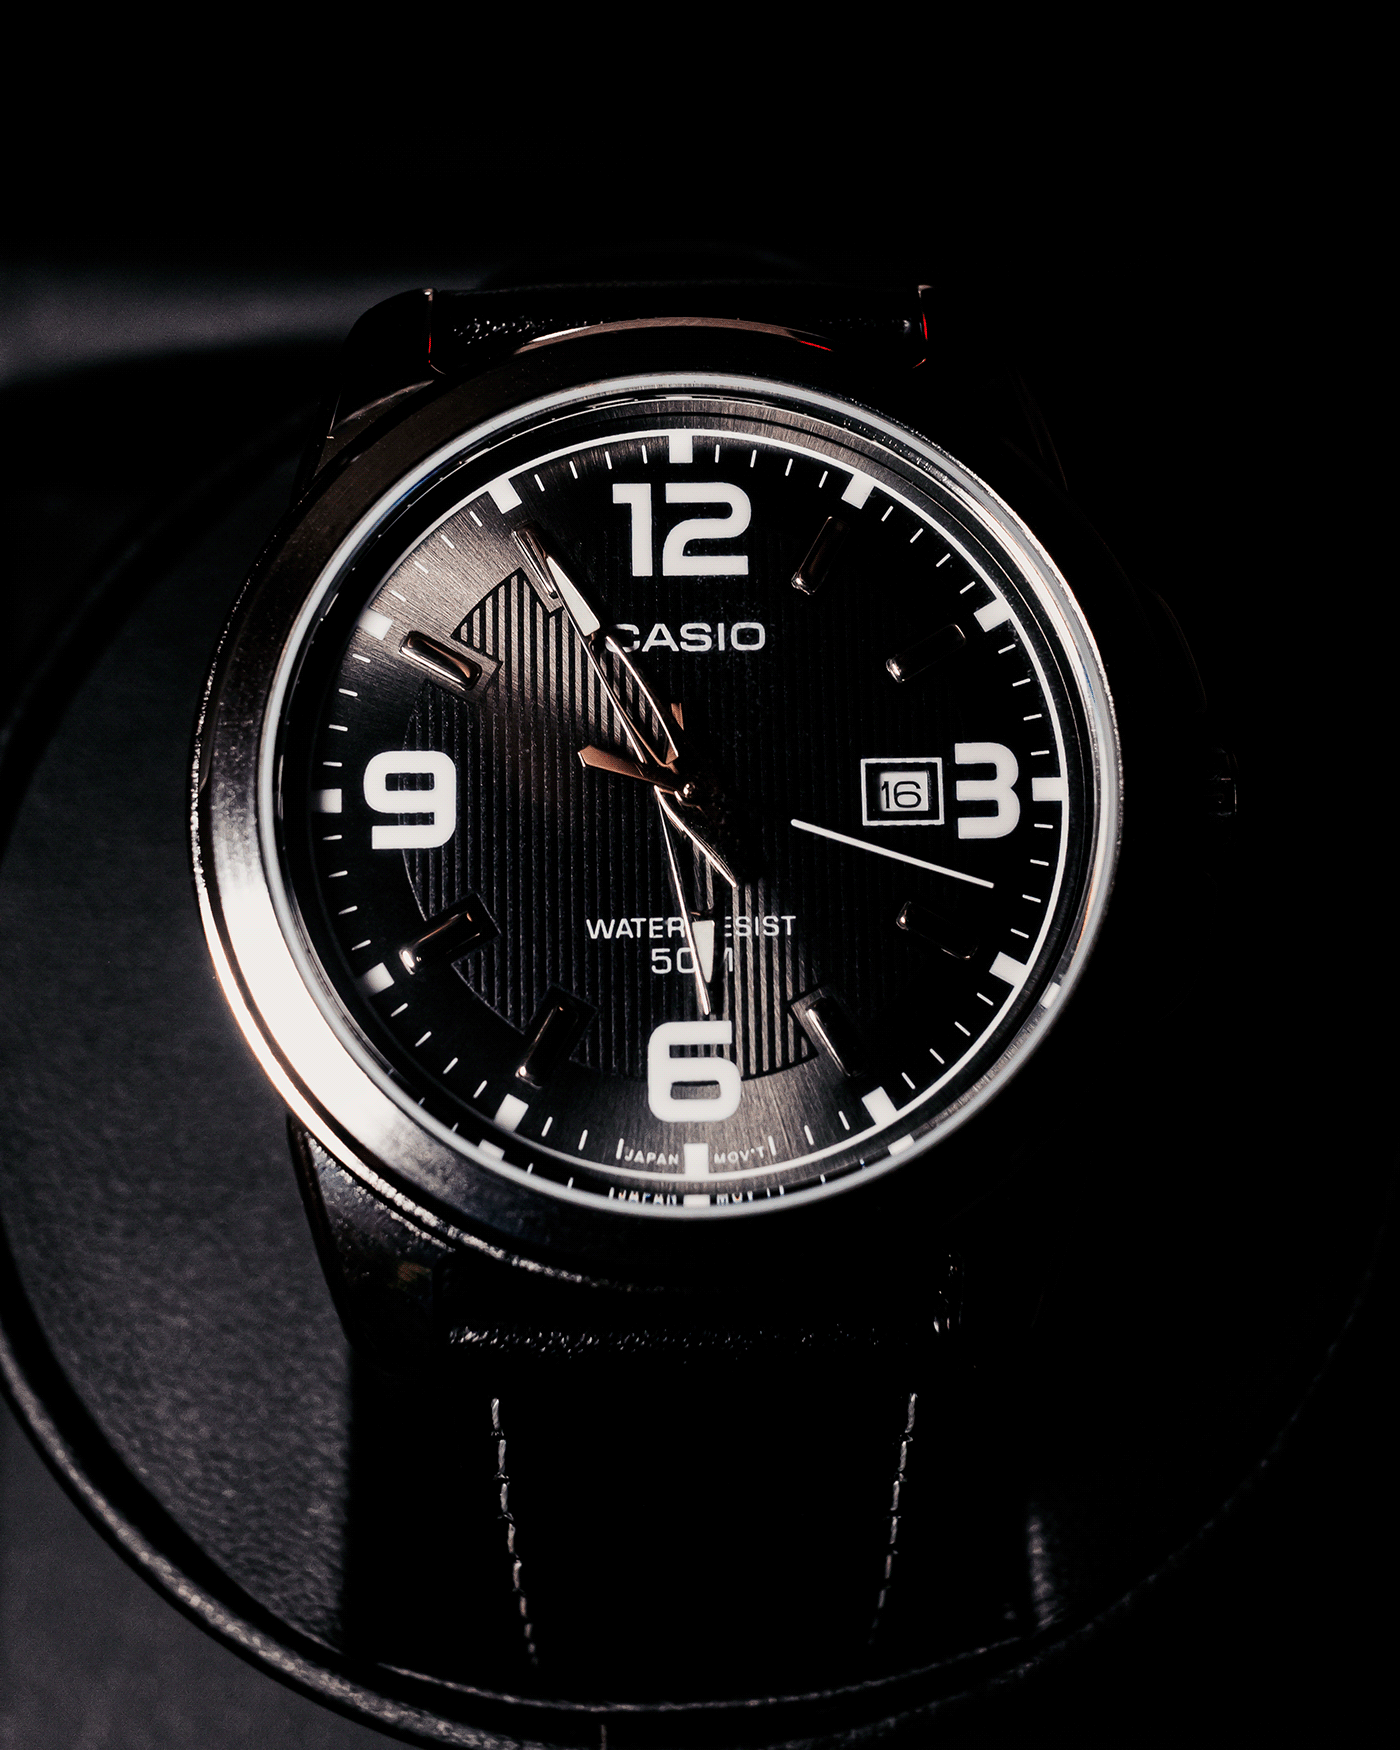 Advertising  Casio Casio Watches marketing   photographer Photography  product Product Photography still life watch